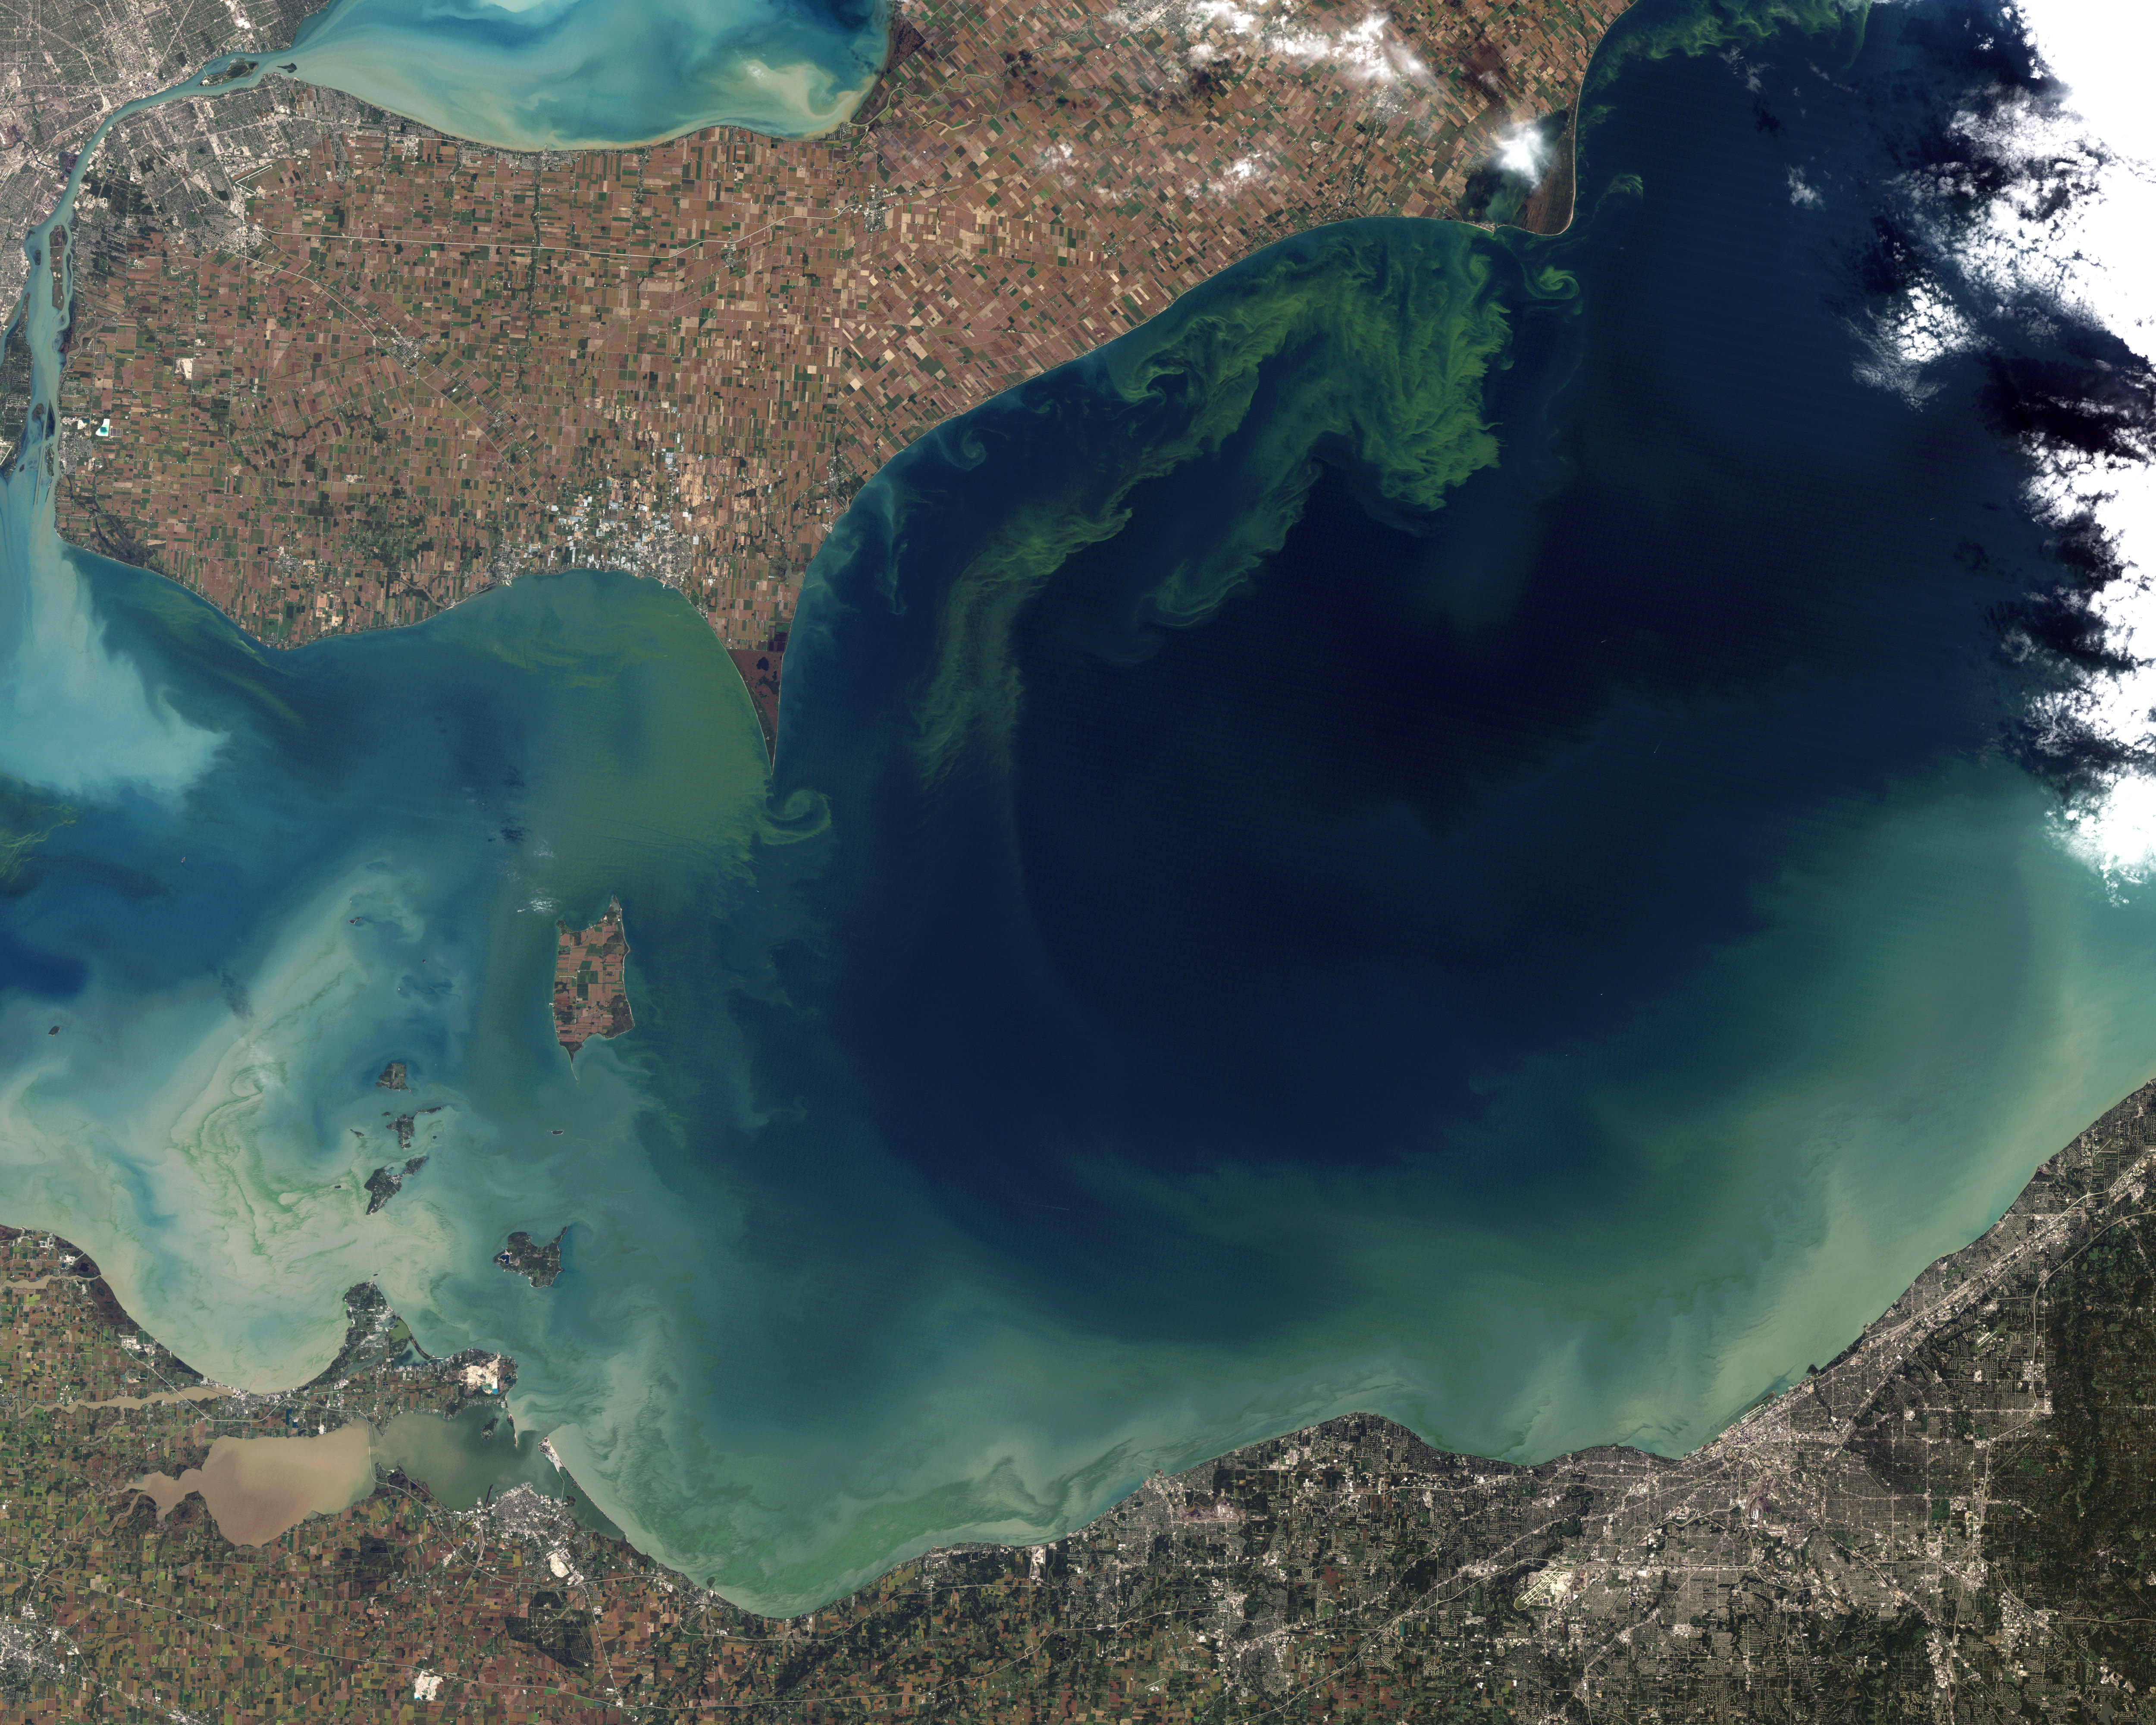 Toxic algae bloom in Lake Erie. Credit: NASA Earth Observatory (public domain)